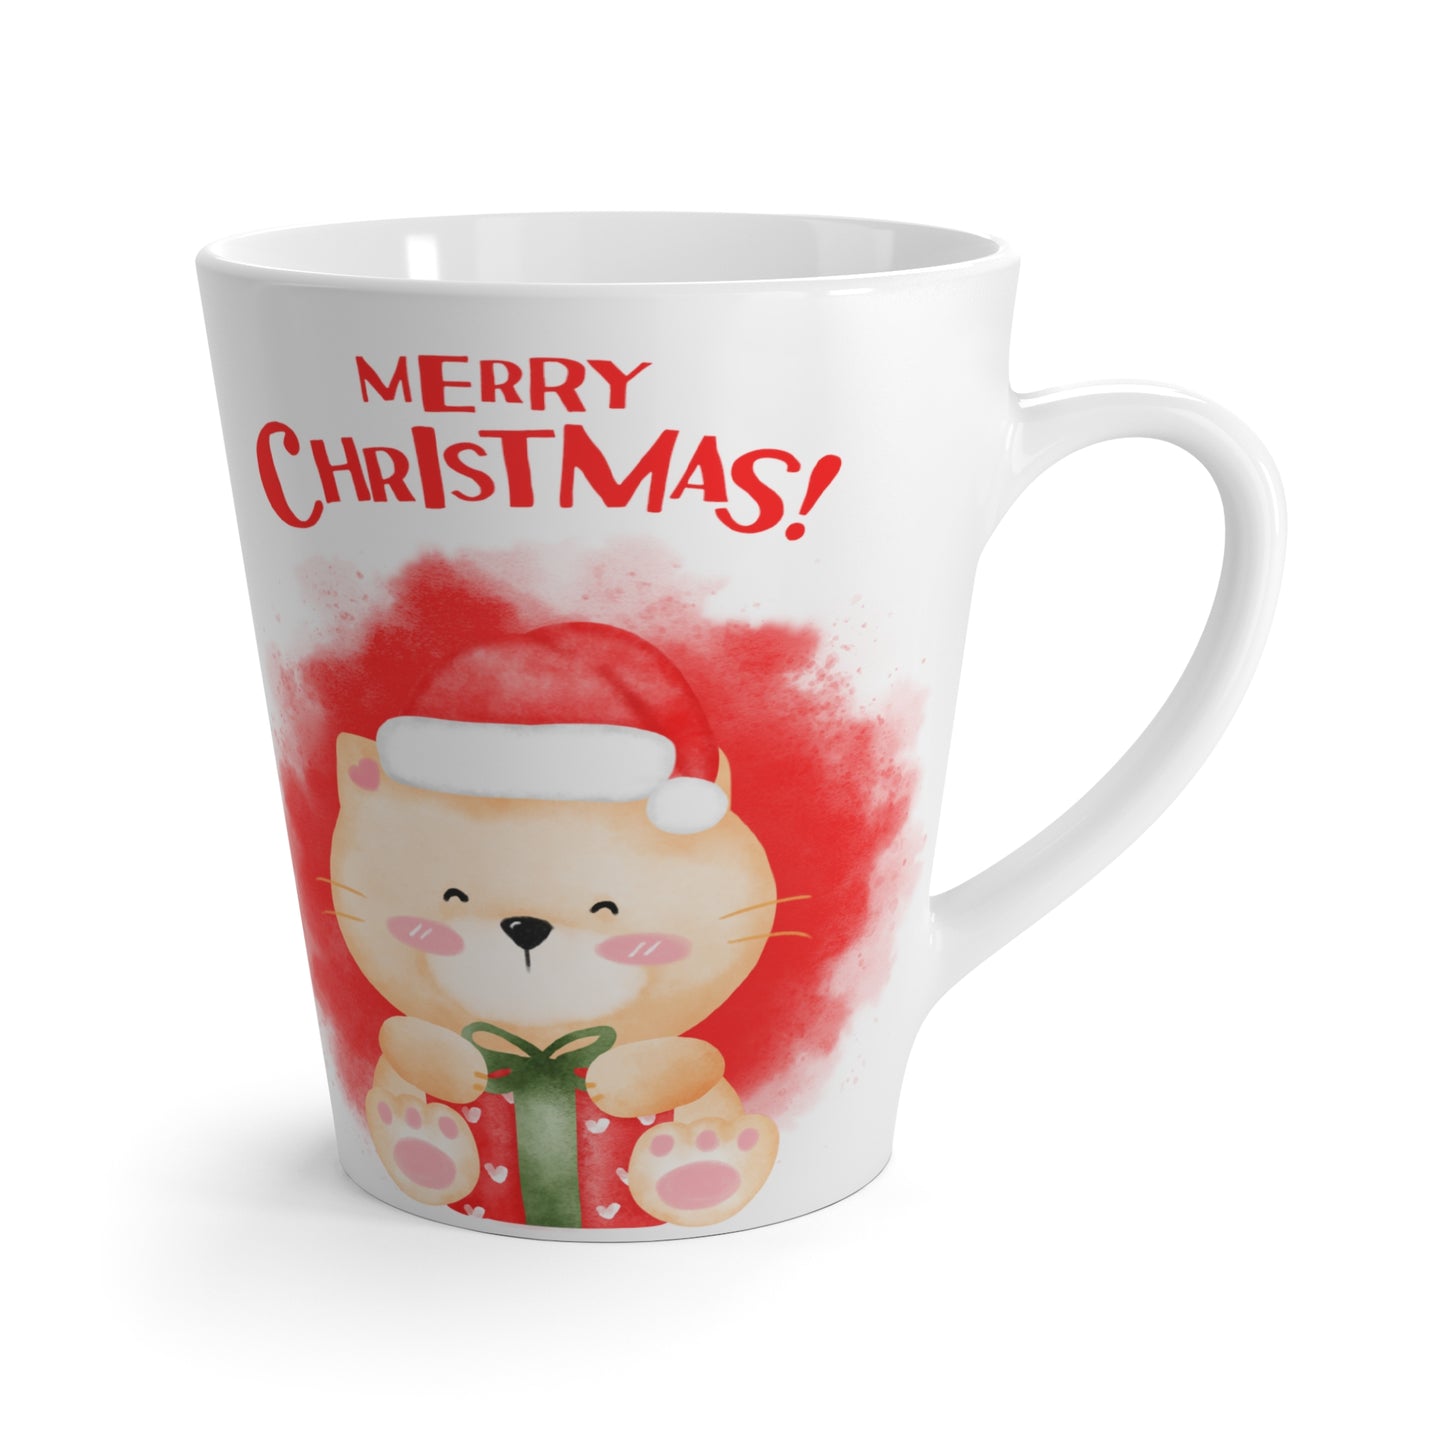 Merry Christmas with Teddy Printed Lattee Mugs, 12oz